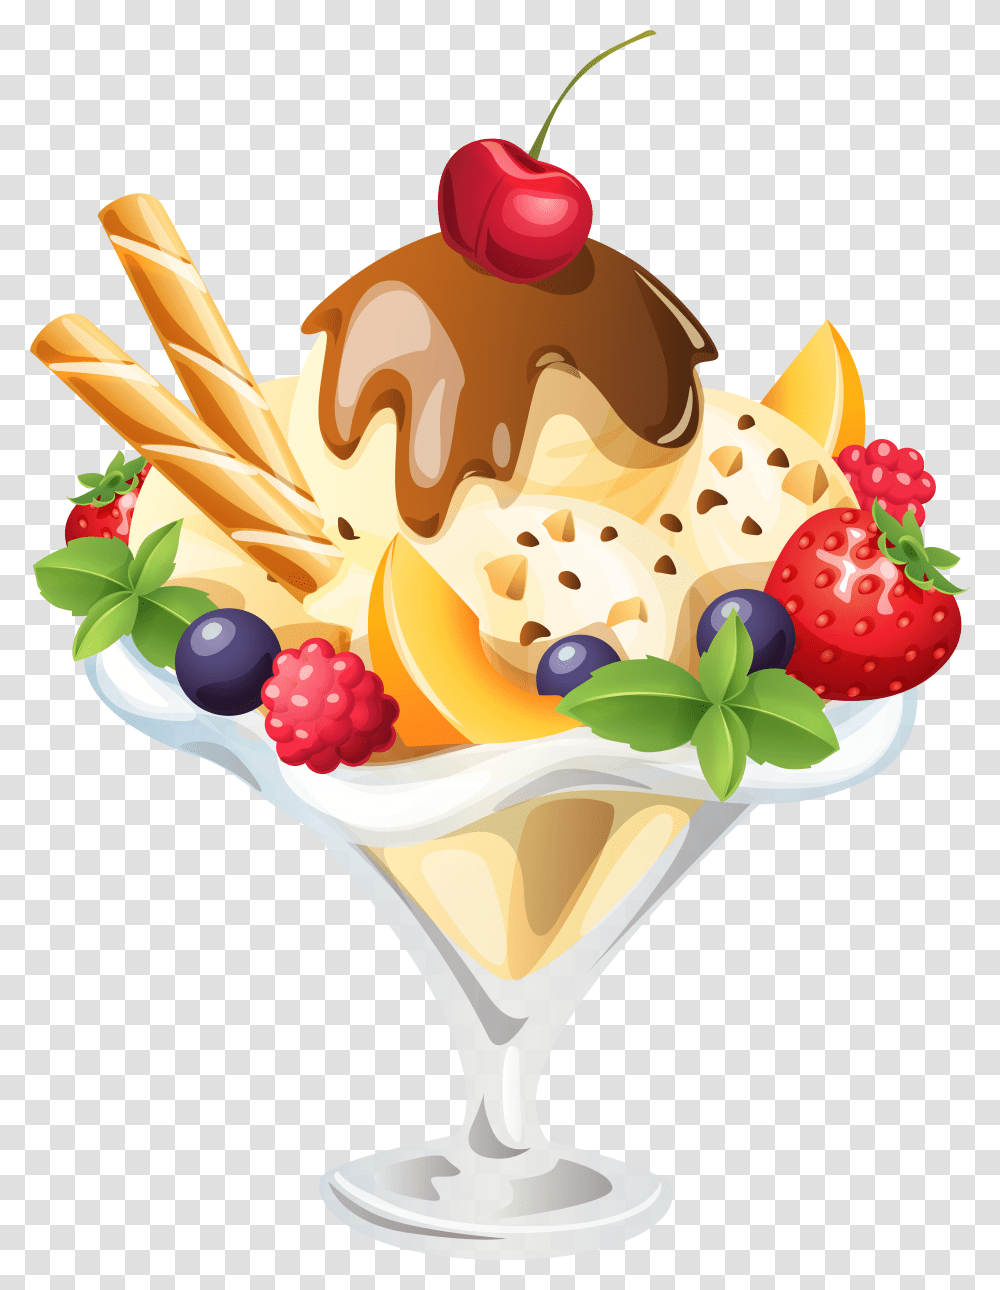 Ice Cream Sundae Clipart Image Ice Cream Sundae, Dessert, Food, Creme, Birthday Cake Transparent Png